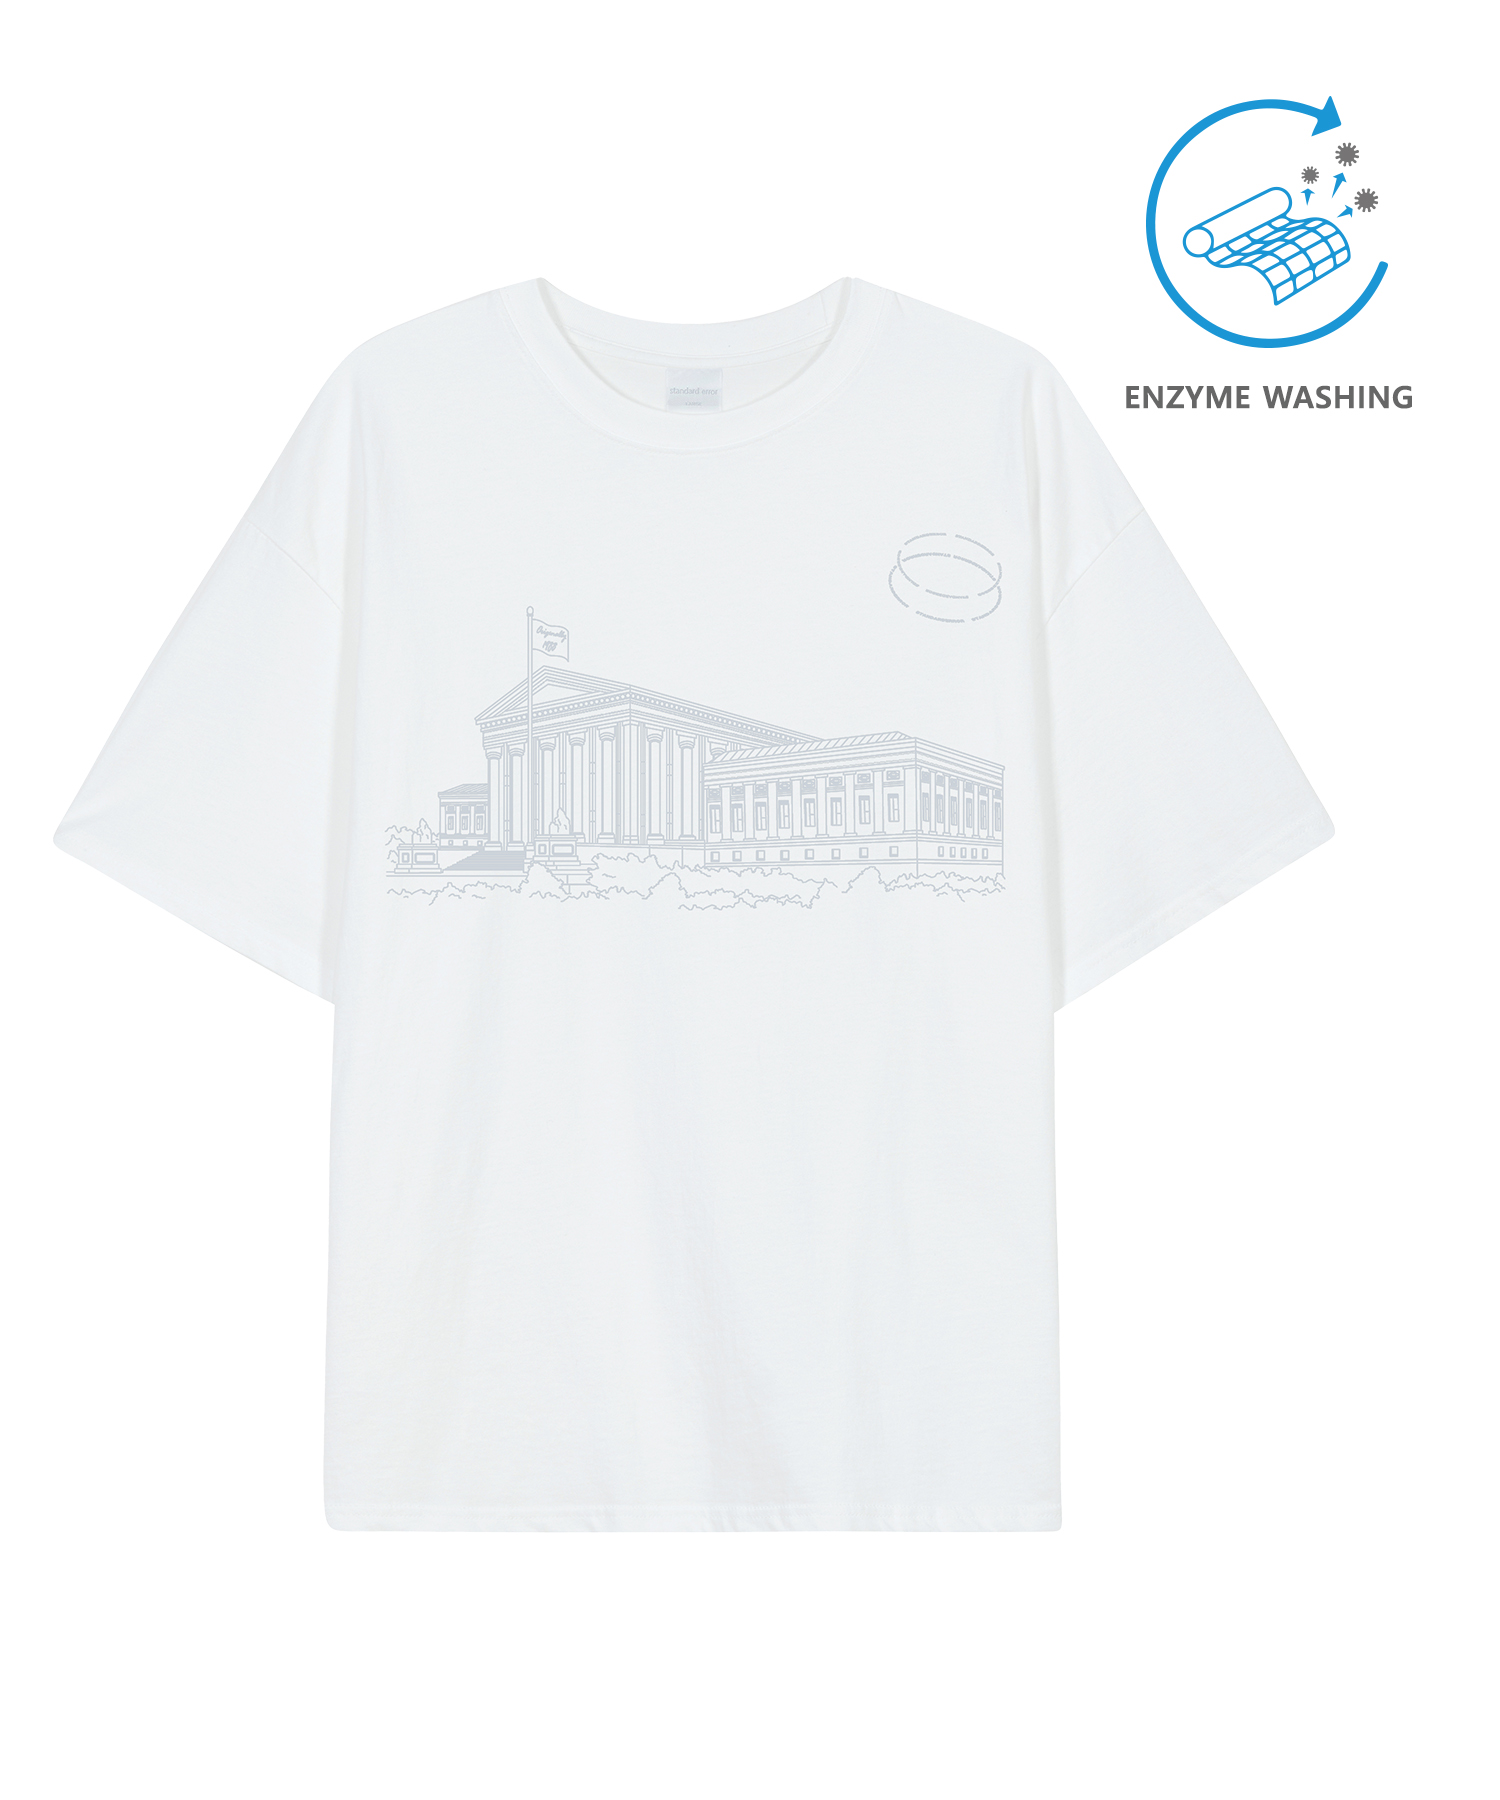 IRT168 [Compact YAN] Enzaim Washing Drawing College Short-sleeved T-shirt White